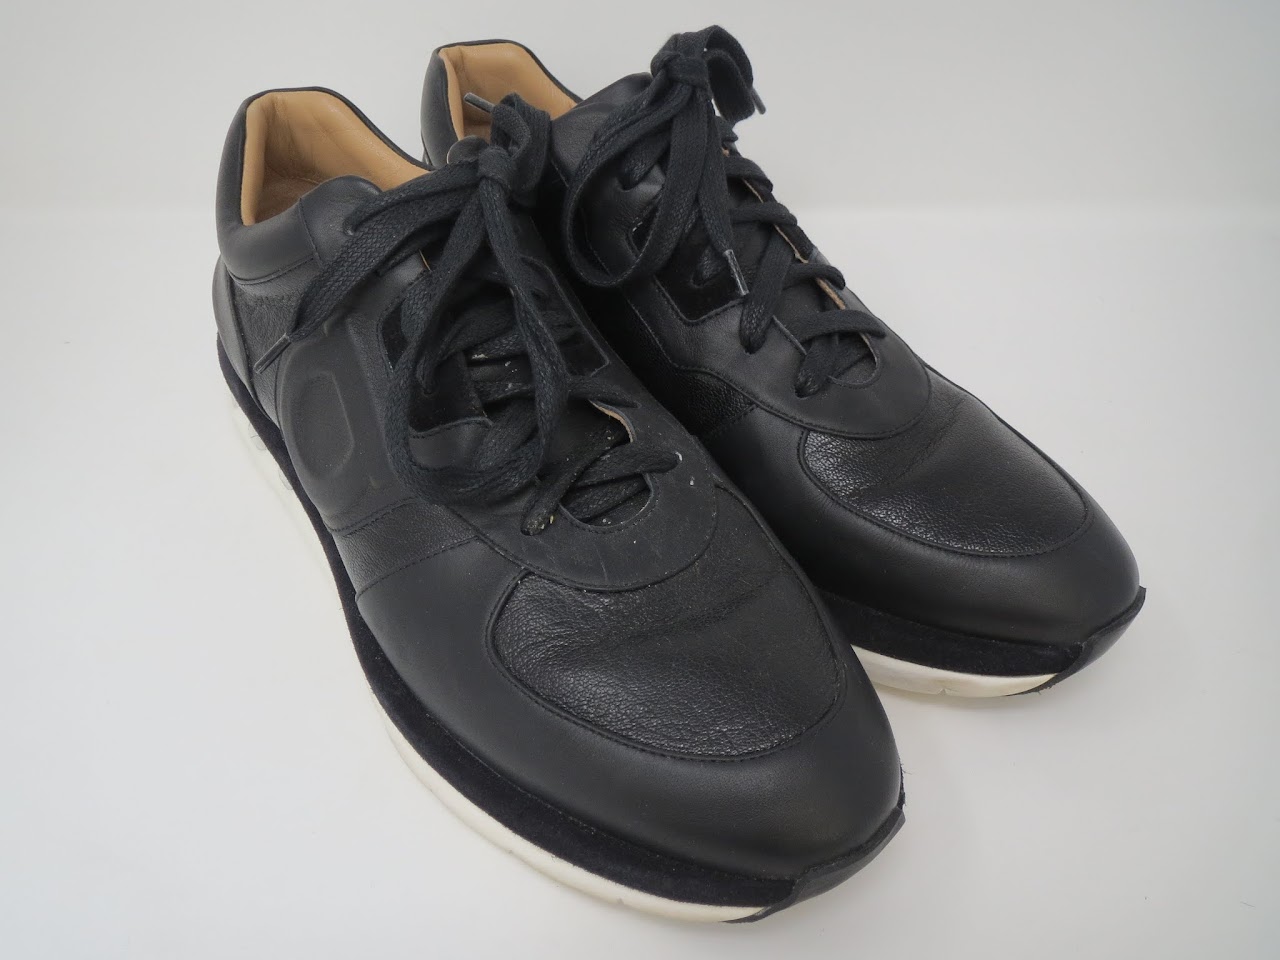 Ferragamo Men's Black Leather Sneakers